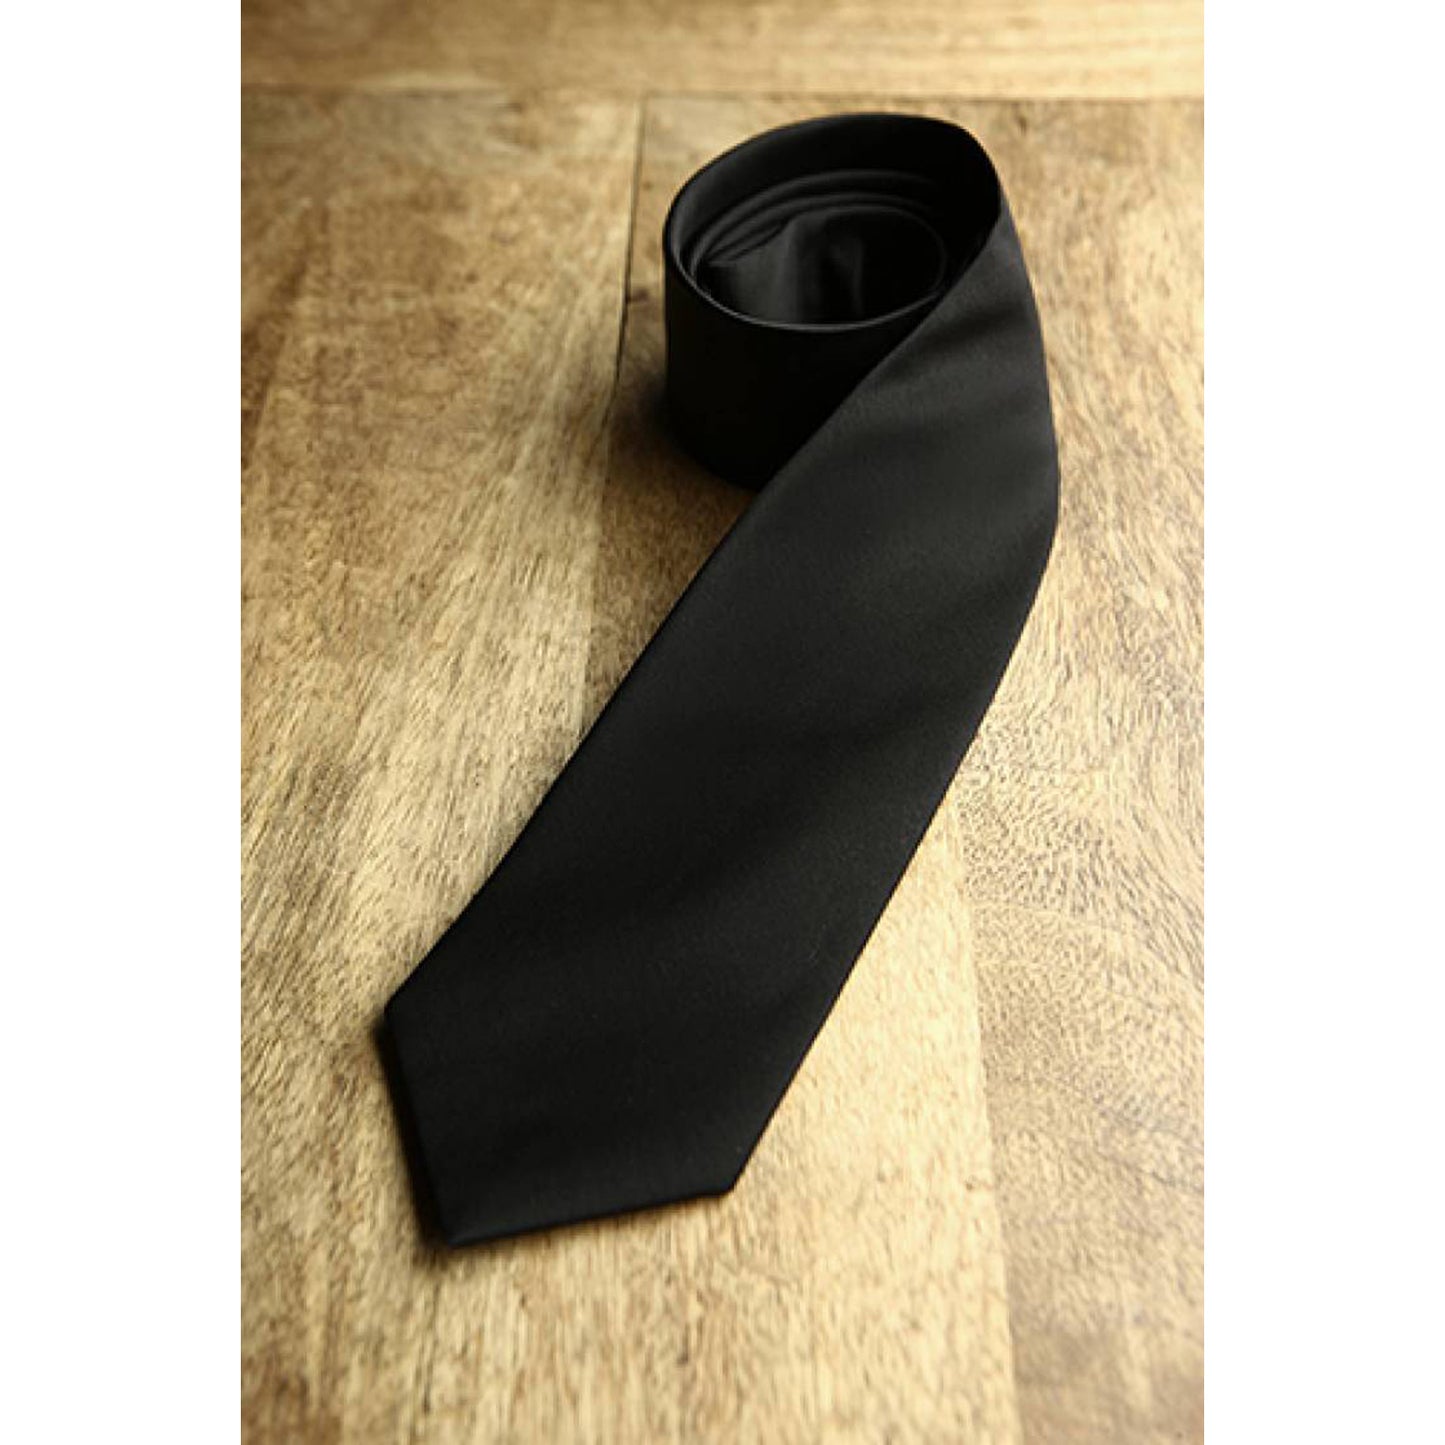 Neck Tie - Black, Red, or White